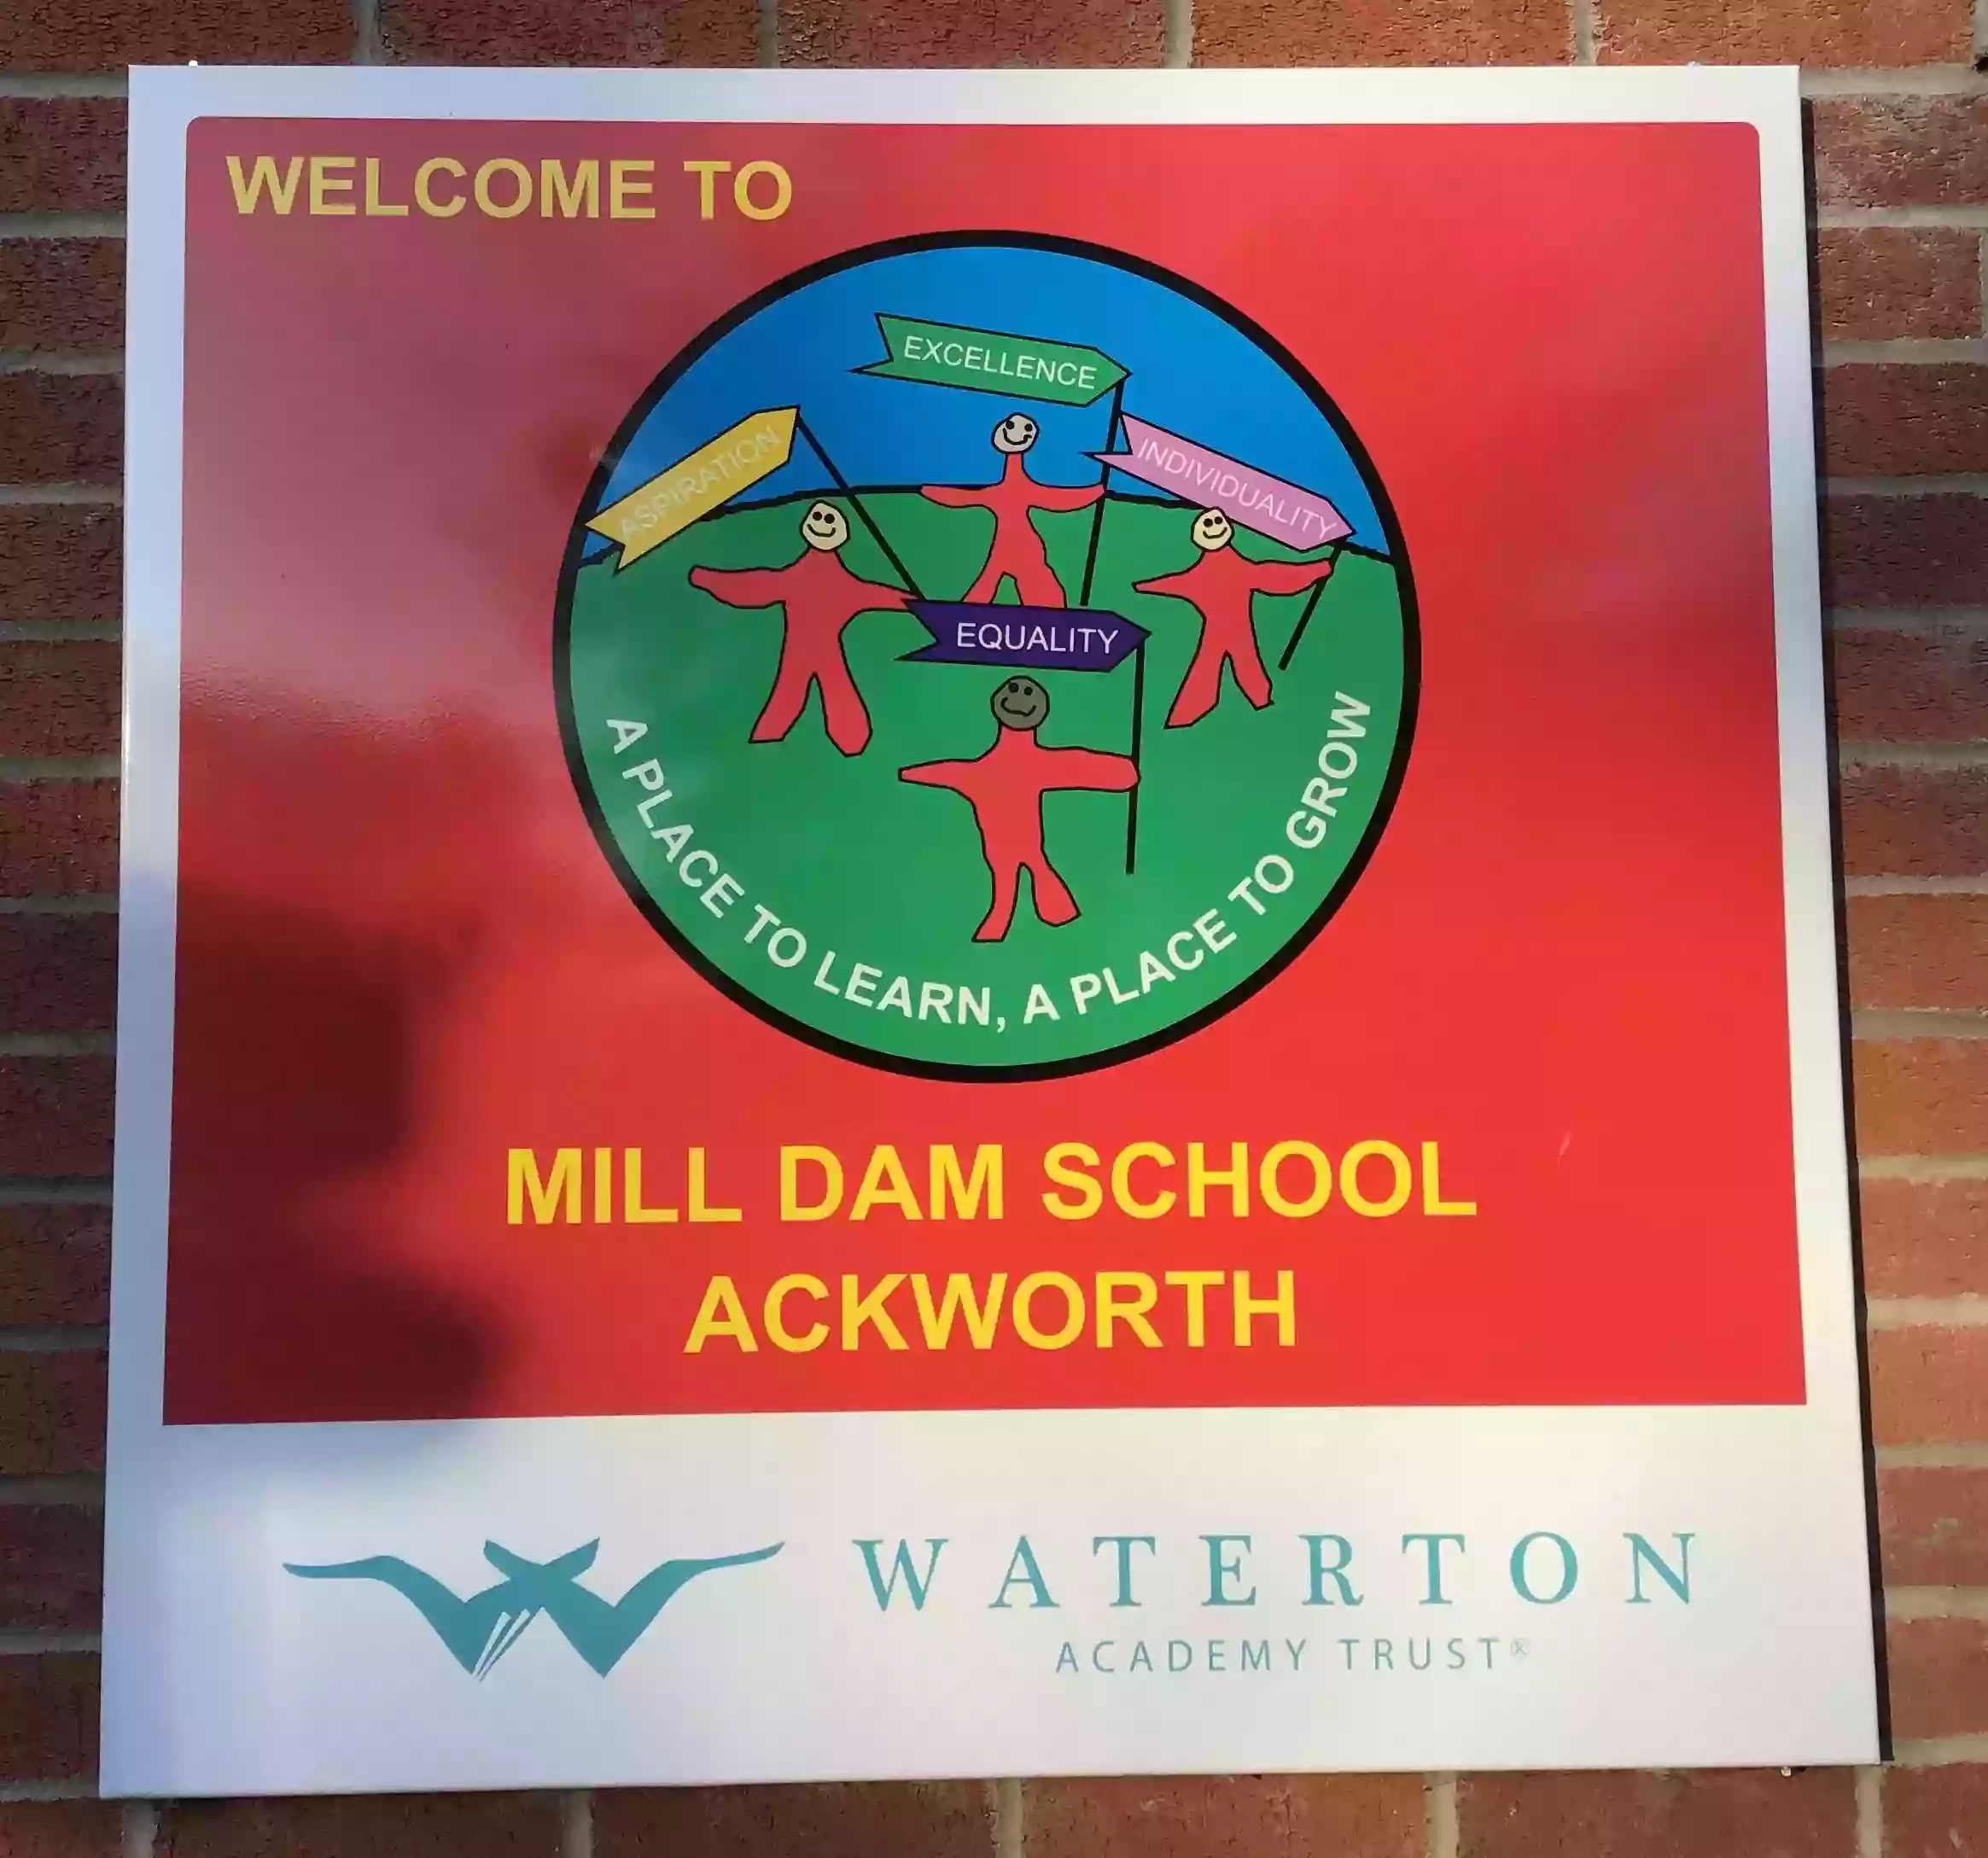 Ackworth Mill Dam School